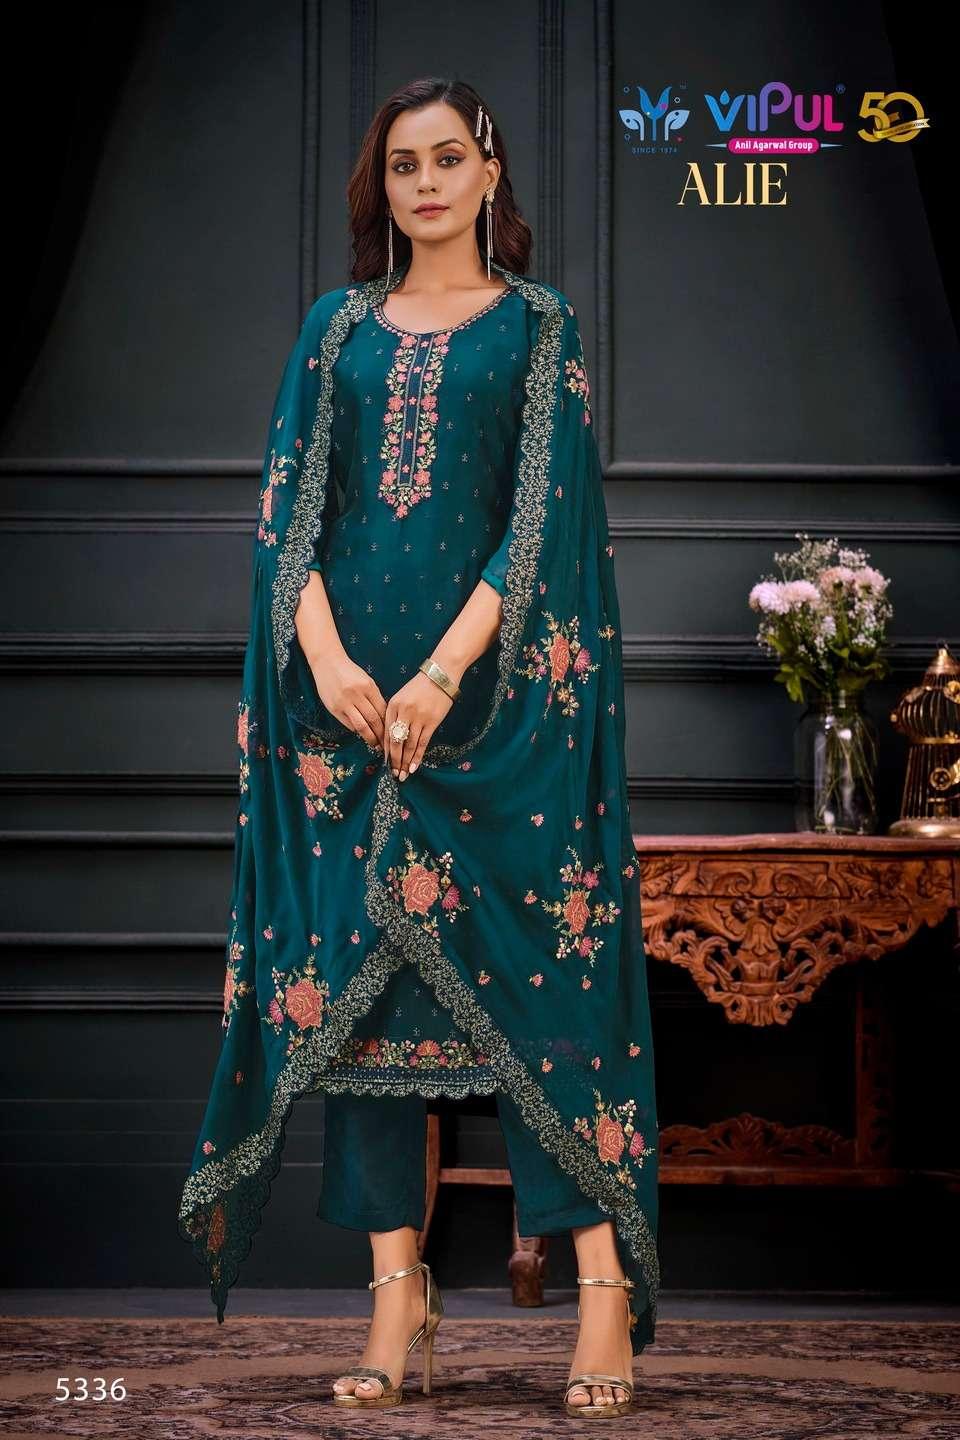 Premium quality Indian Designer two tone heavy embroidery dress set, Indian/Pakistani wedding party wear Salwar kamiz suit dress with Dupatta, M - Diana's Fashion Factory